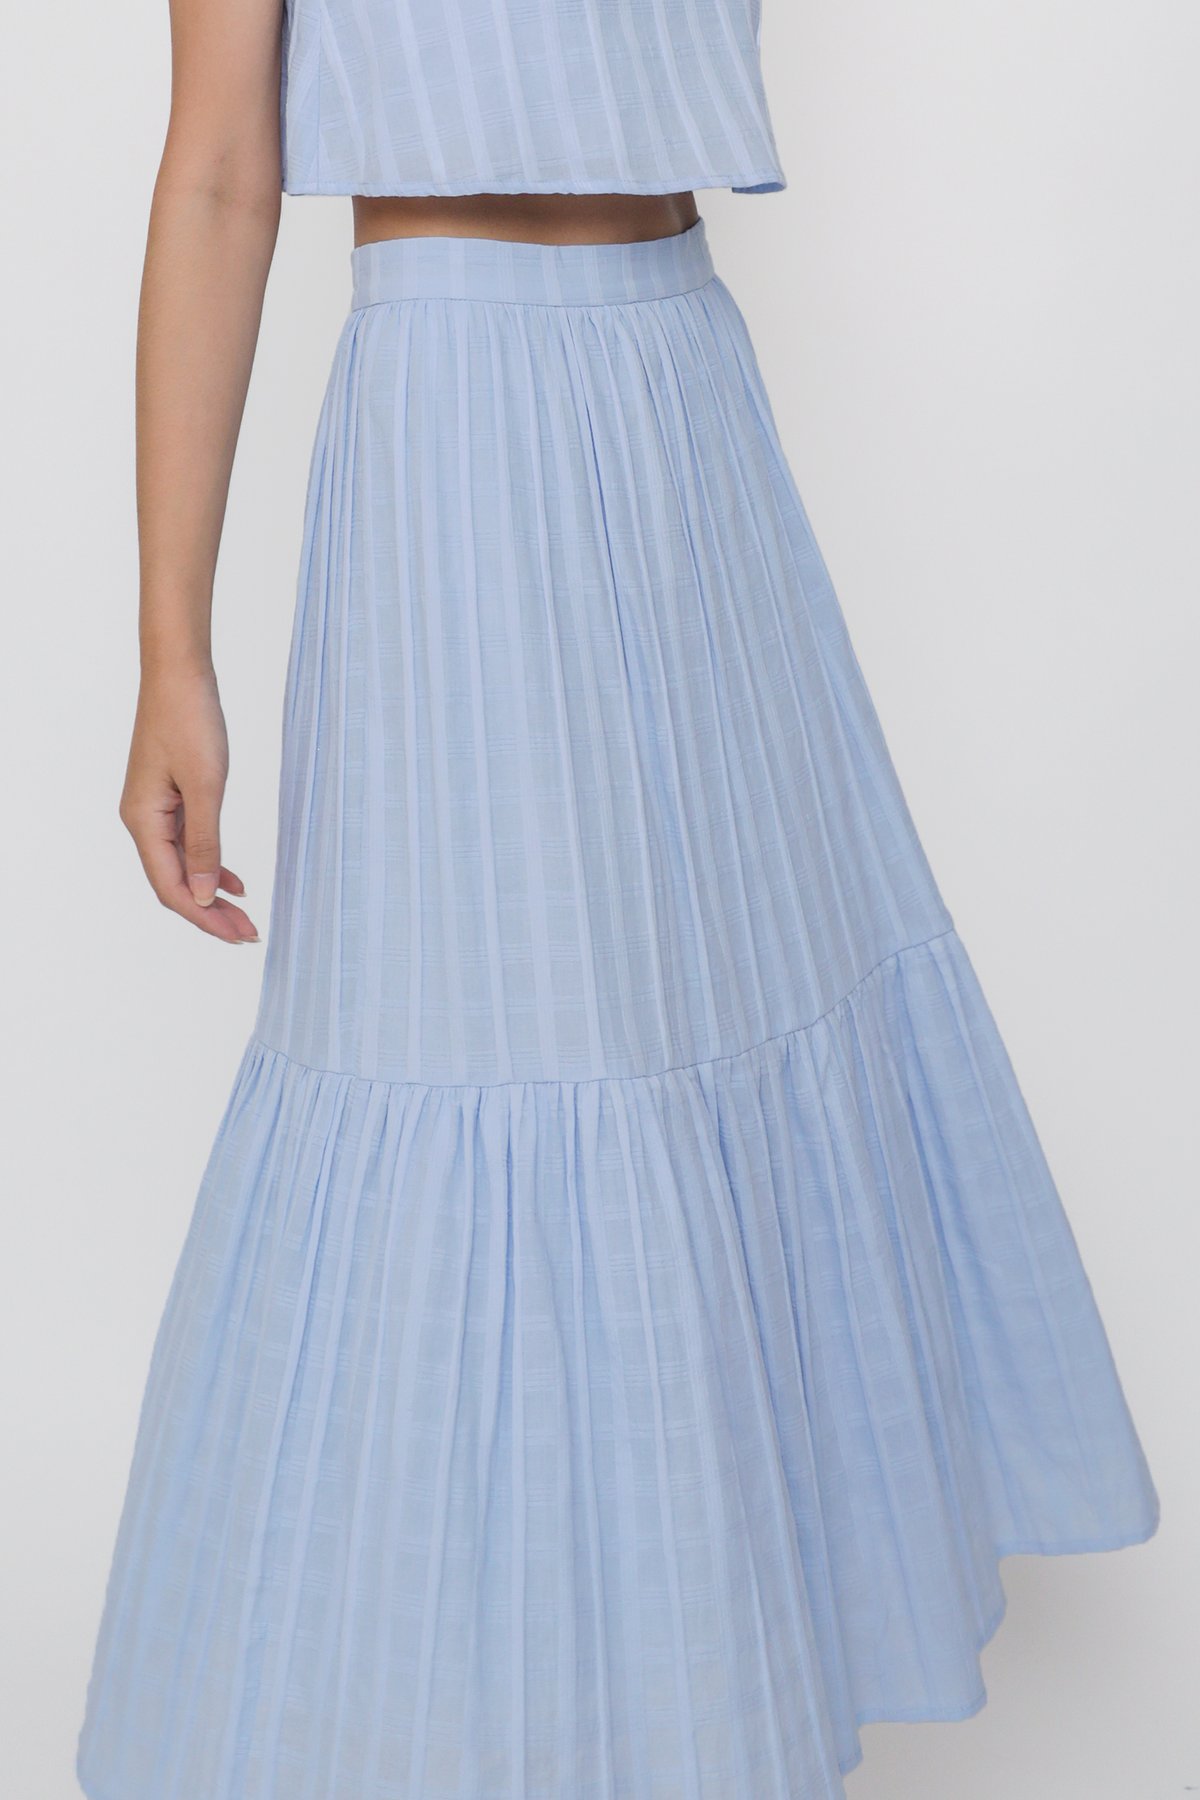 Adena Tiered Skirt (Blue Gingham)